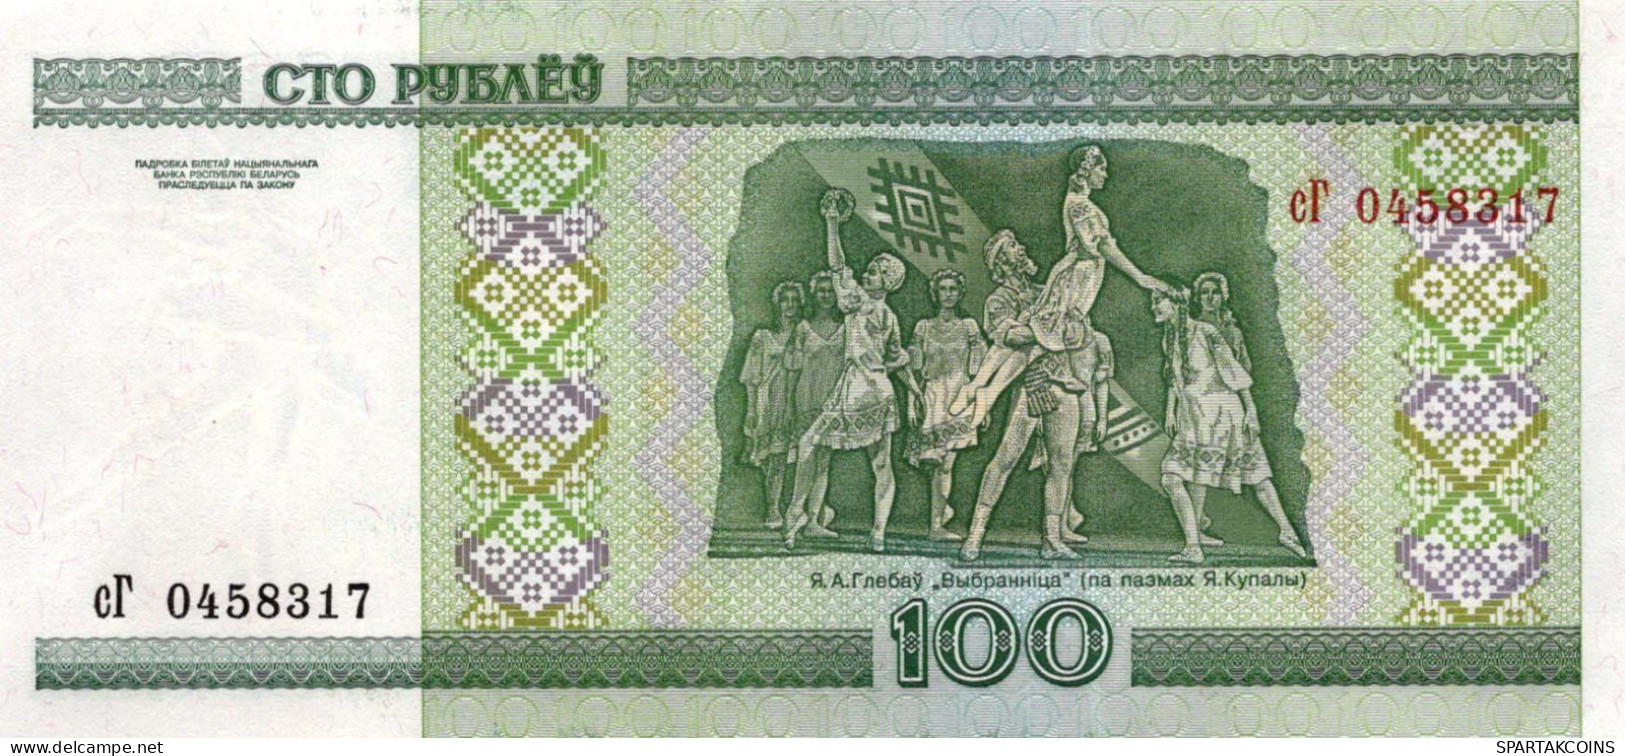 100 RUBLES 2000 UNC BELARUS Papiergeld Banknote #PZ005.V - [11] Local Banknote Issues